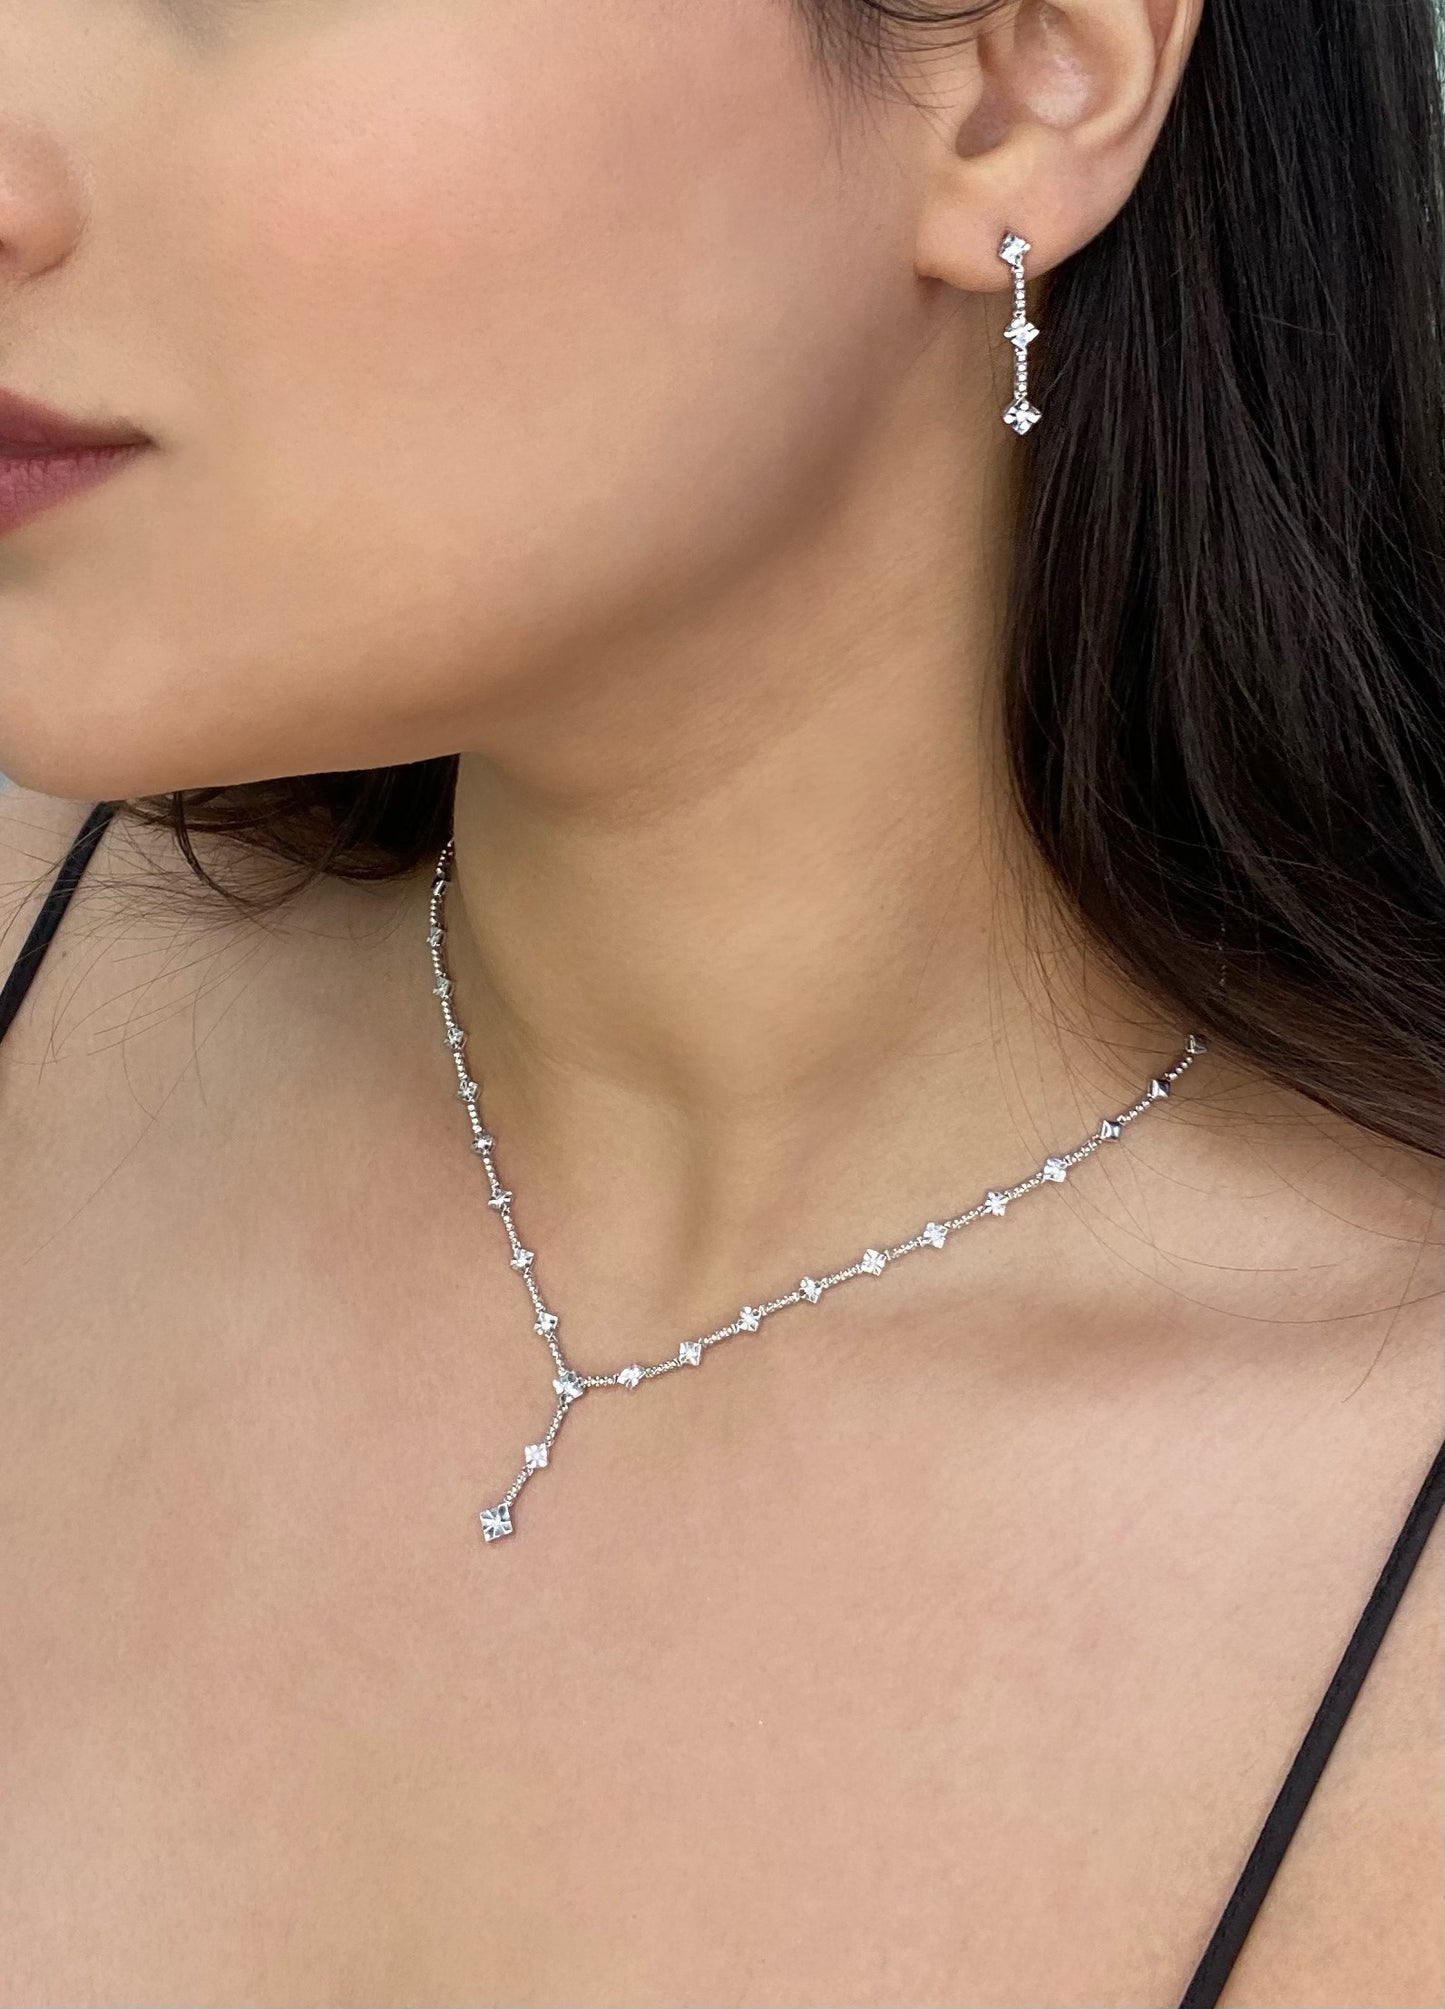 14K White Gold Elegant Diamond Necklace